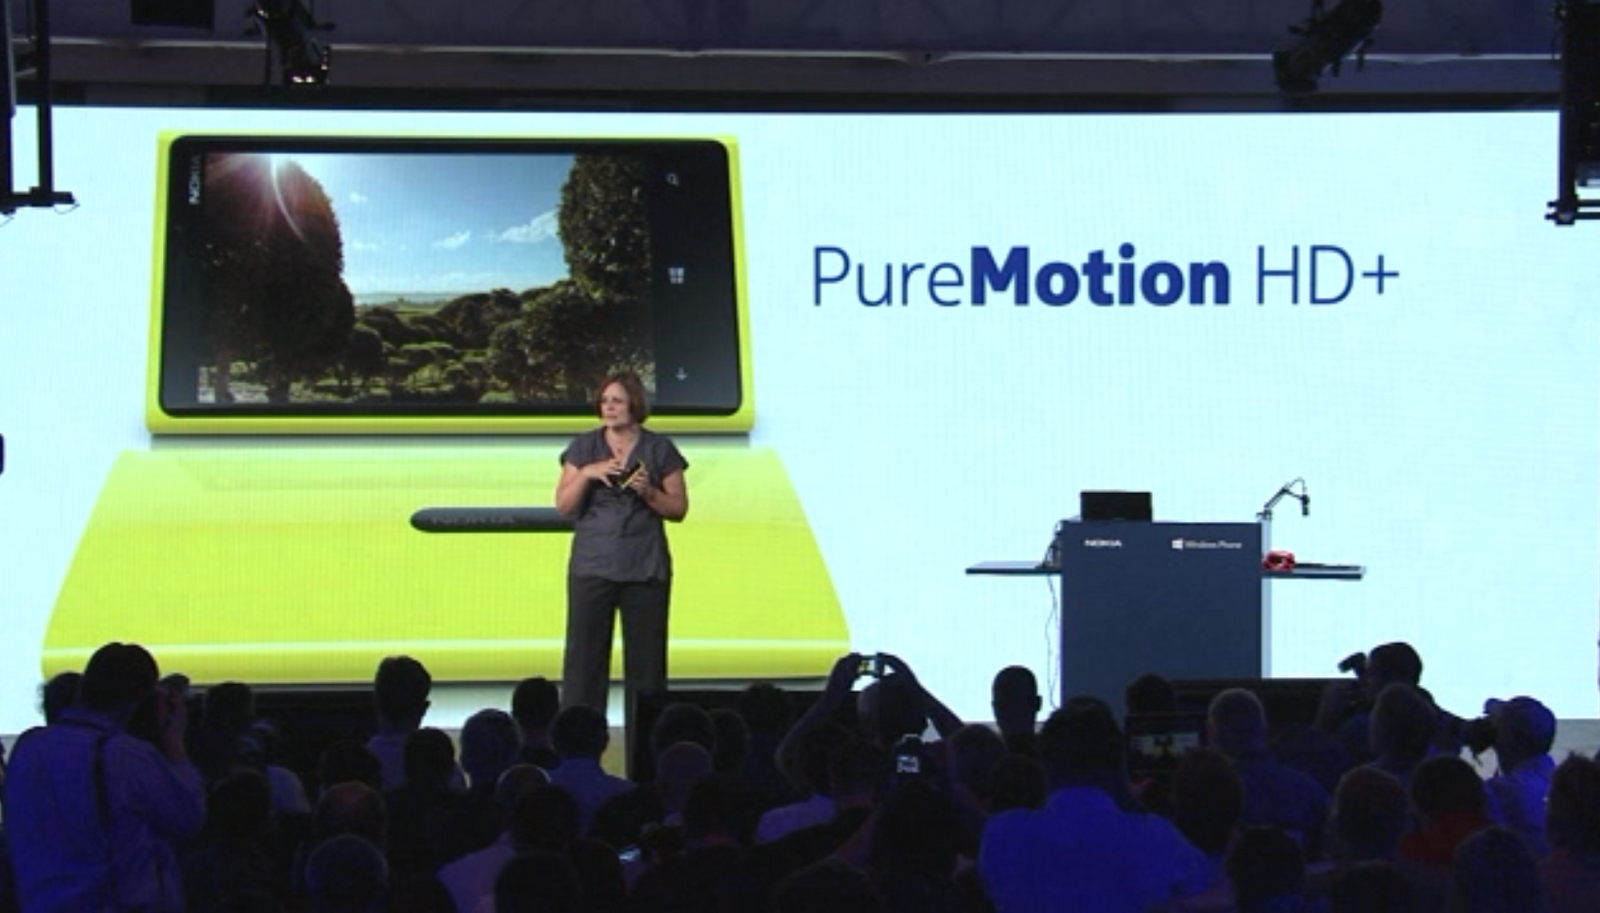 Nokia Lumia Official Puremotion HD Display Pure Camera